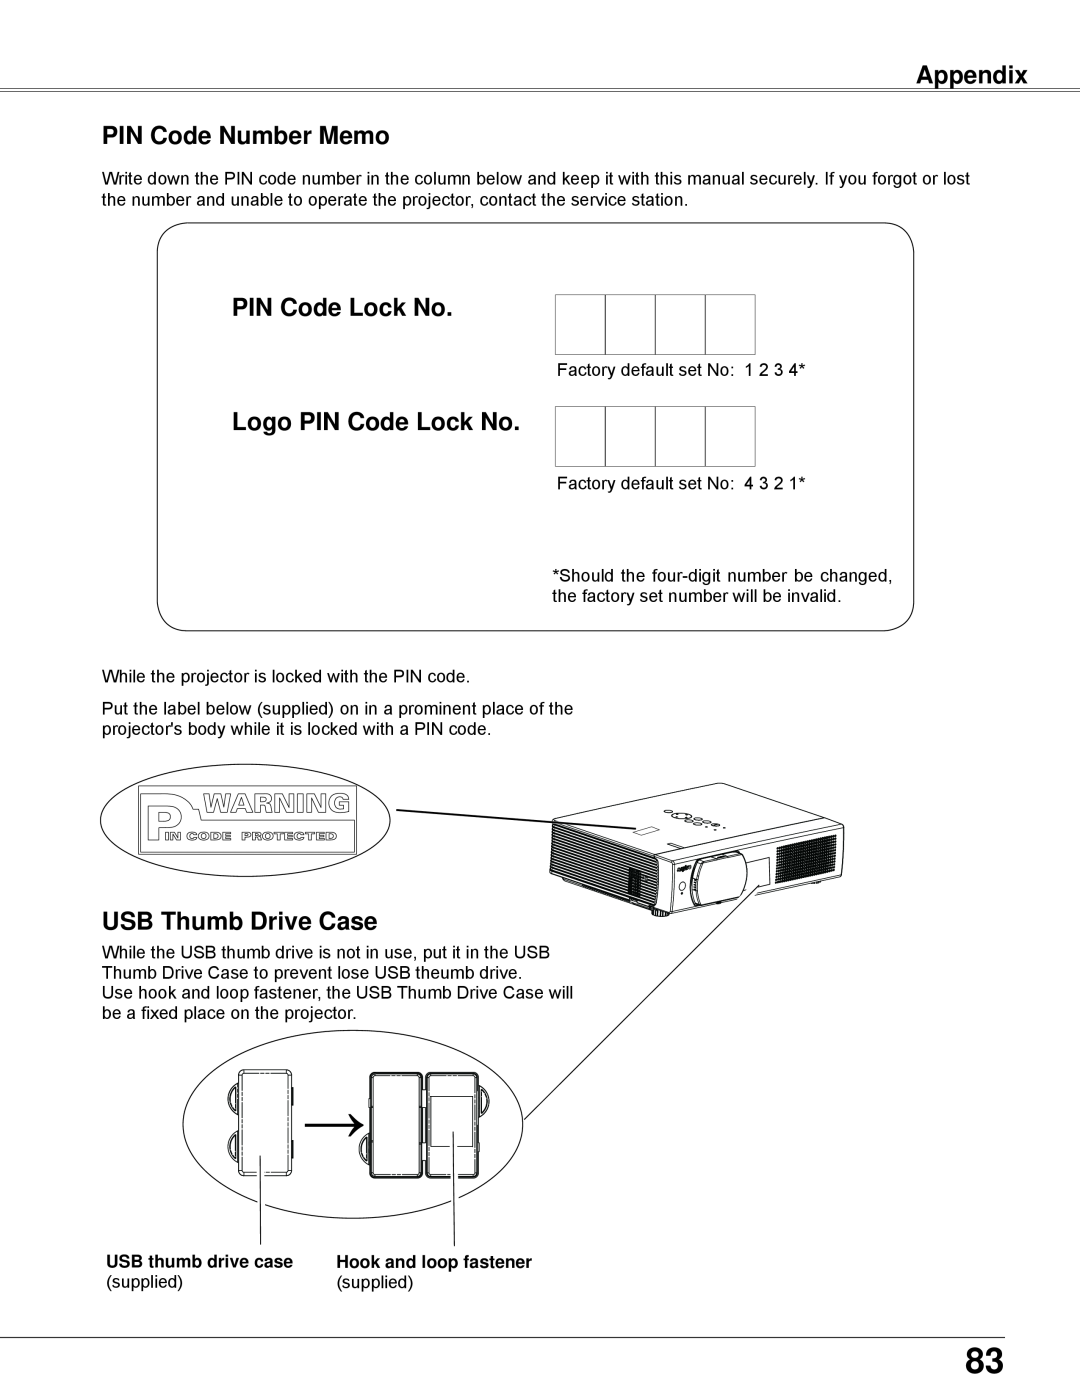 Sanyo PLC-WXU700 Appendix PIN Code Number Memo, Logo PIN Code Lock No, USB Thumb Drive Case, USB thumb drive case 